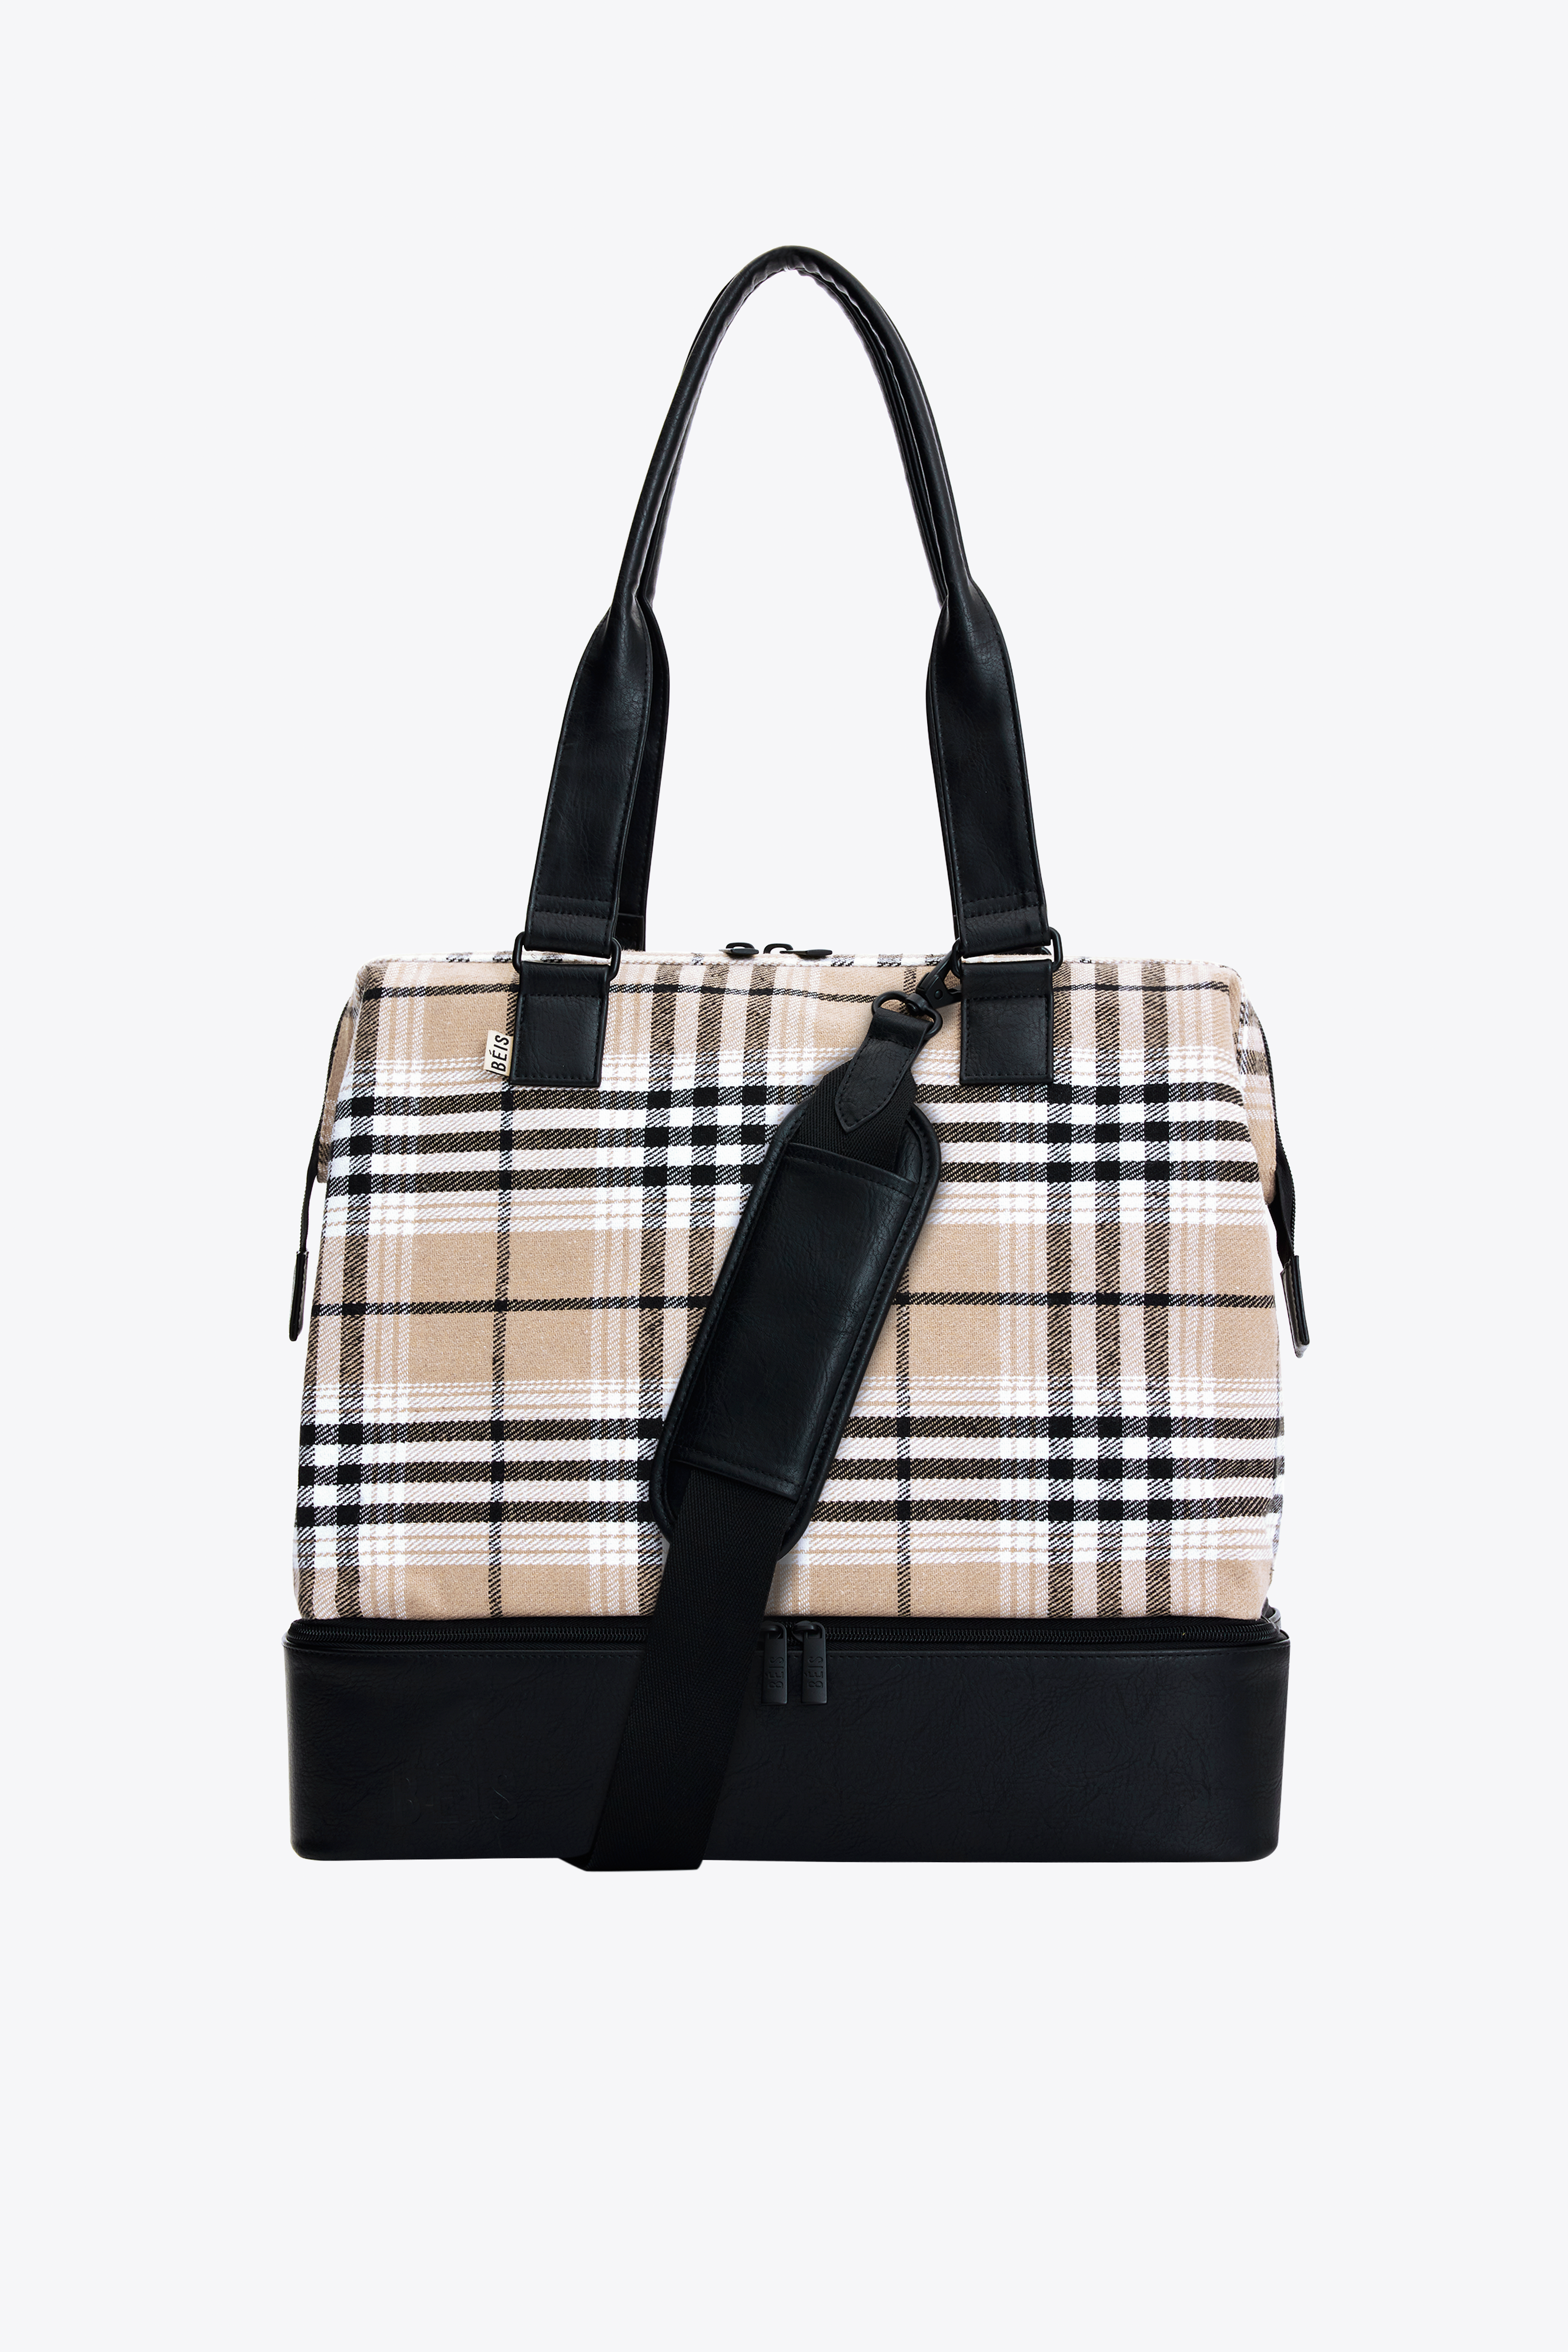 Béis 'The Mini Weekender' in Plaid - Small Plaid Duffle Bag & Overnight Bag